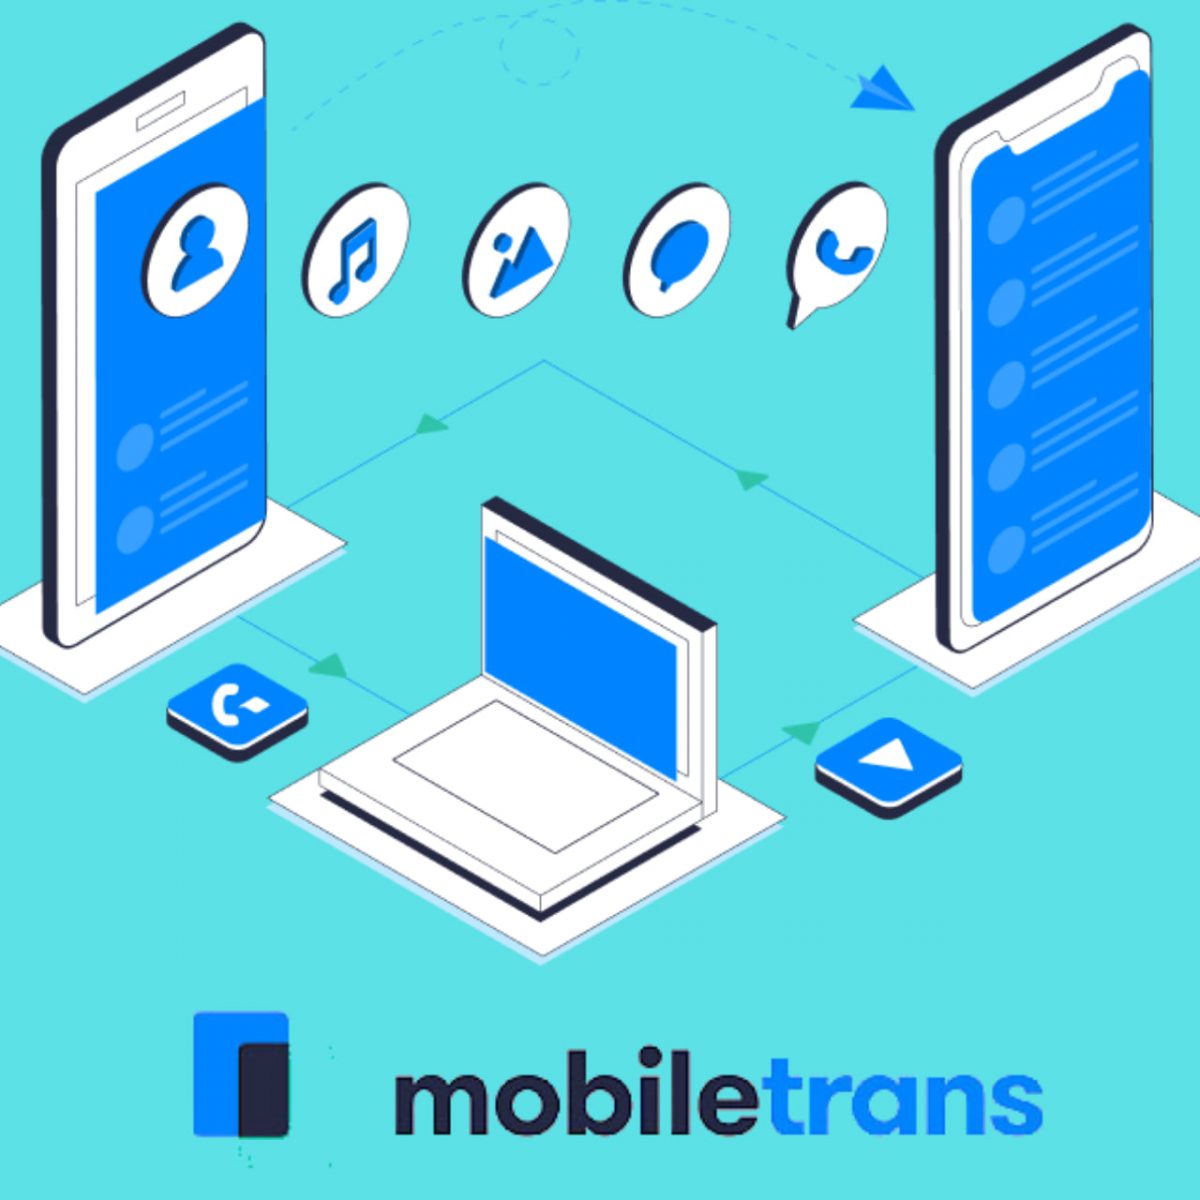 wondershare mobiletrans email and registration code